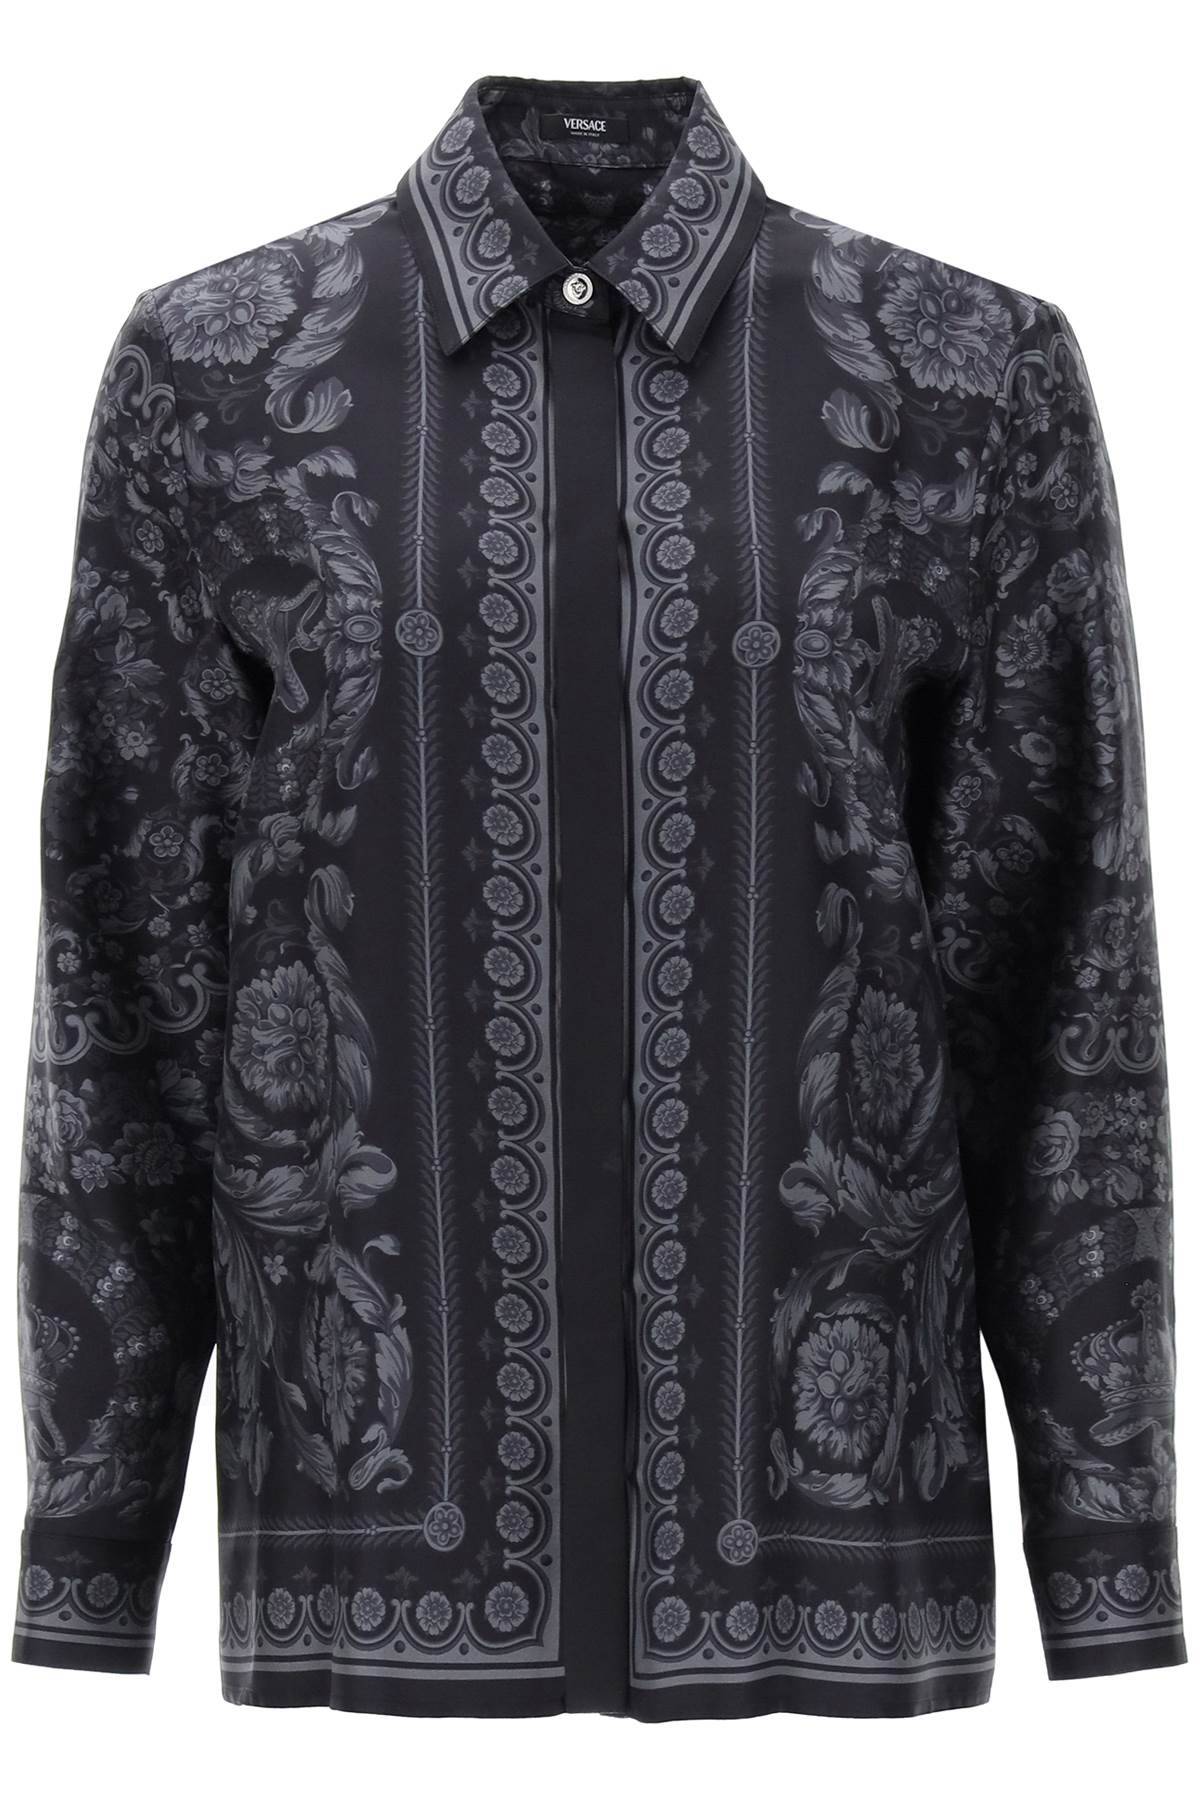 Versace VERSACE barocco shirt in crepe de chine